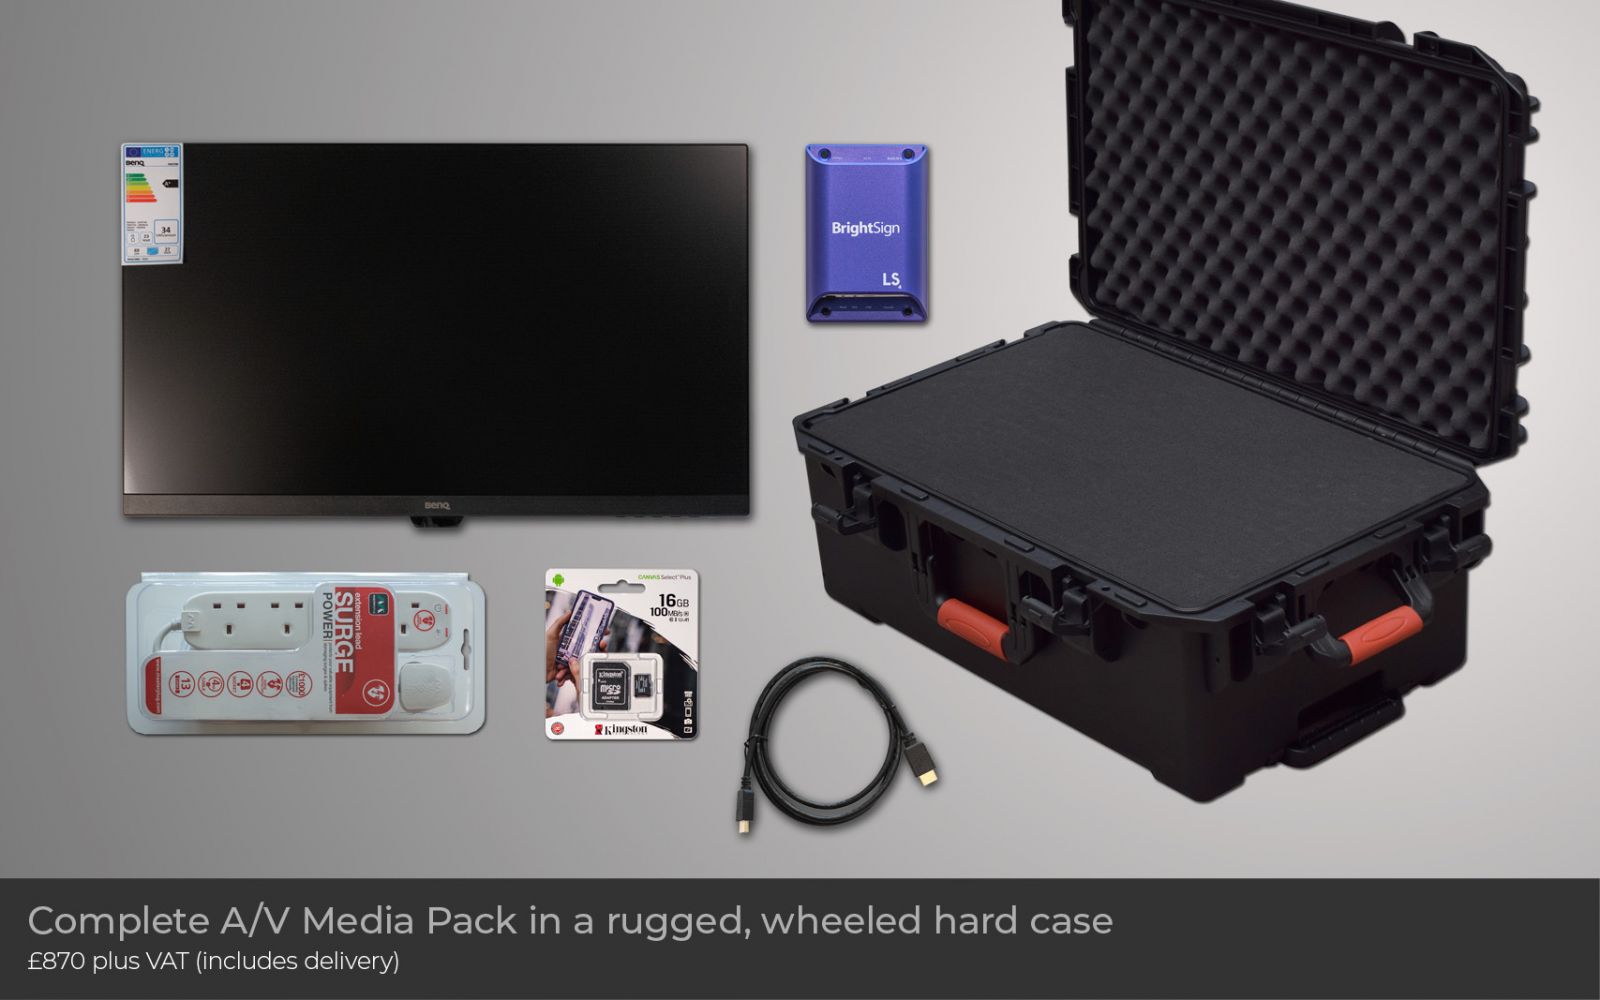 X-Media Pack and Hard Wheeled Flight Case